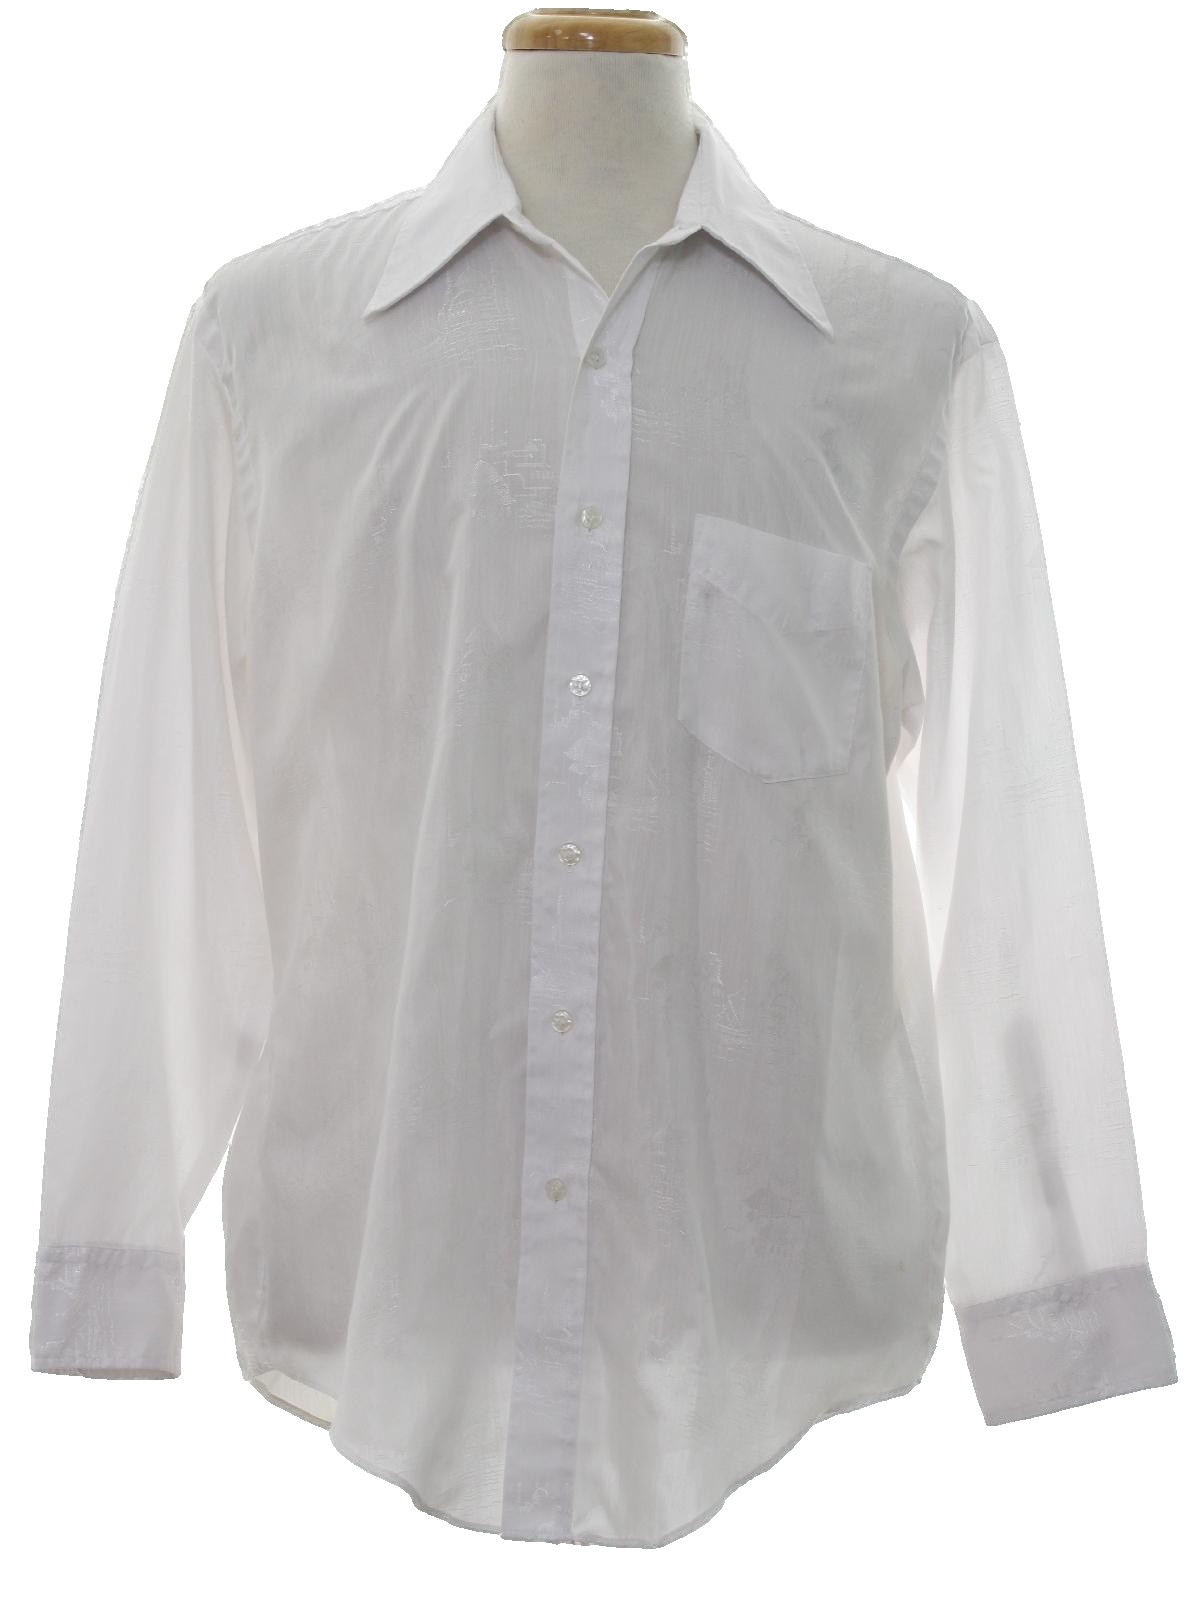 Retro 70s Shirt (JC Penney) : 70s -JC Penney- Mens white background ...